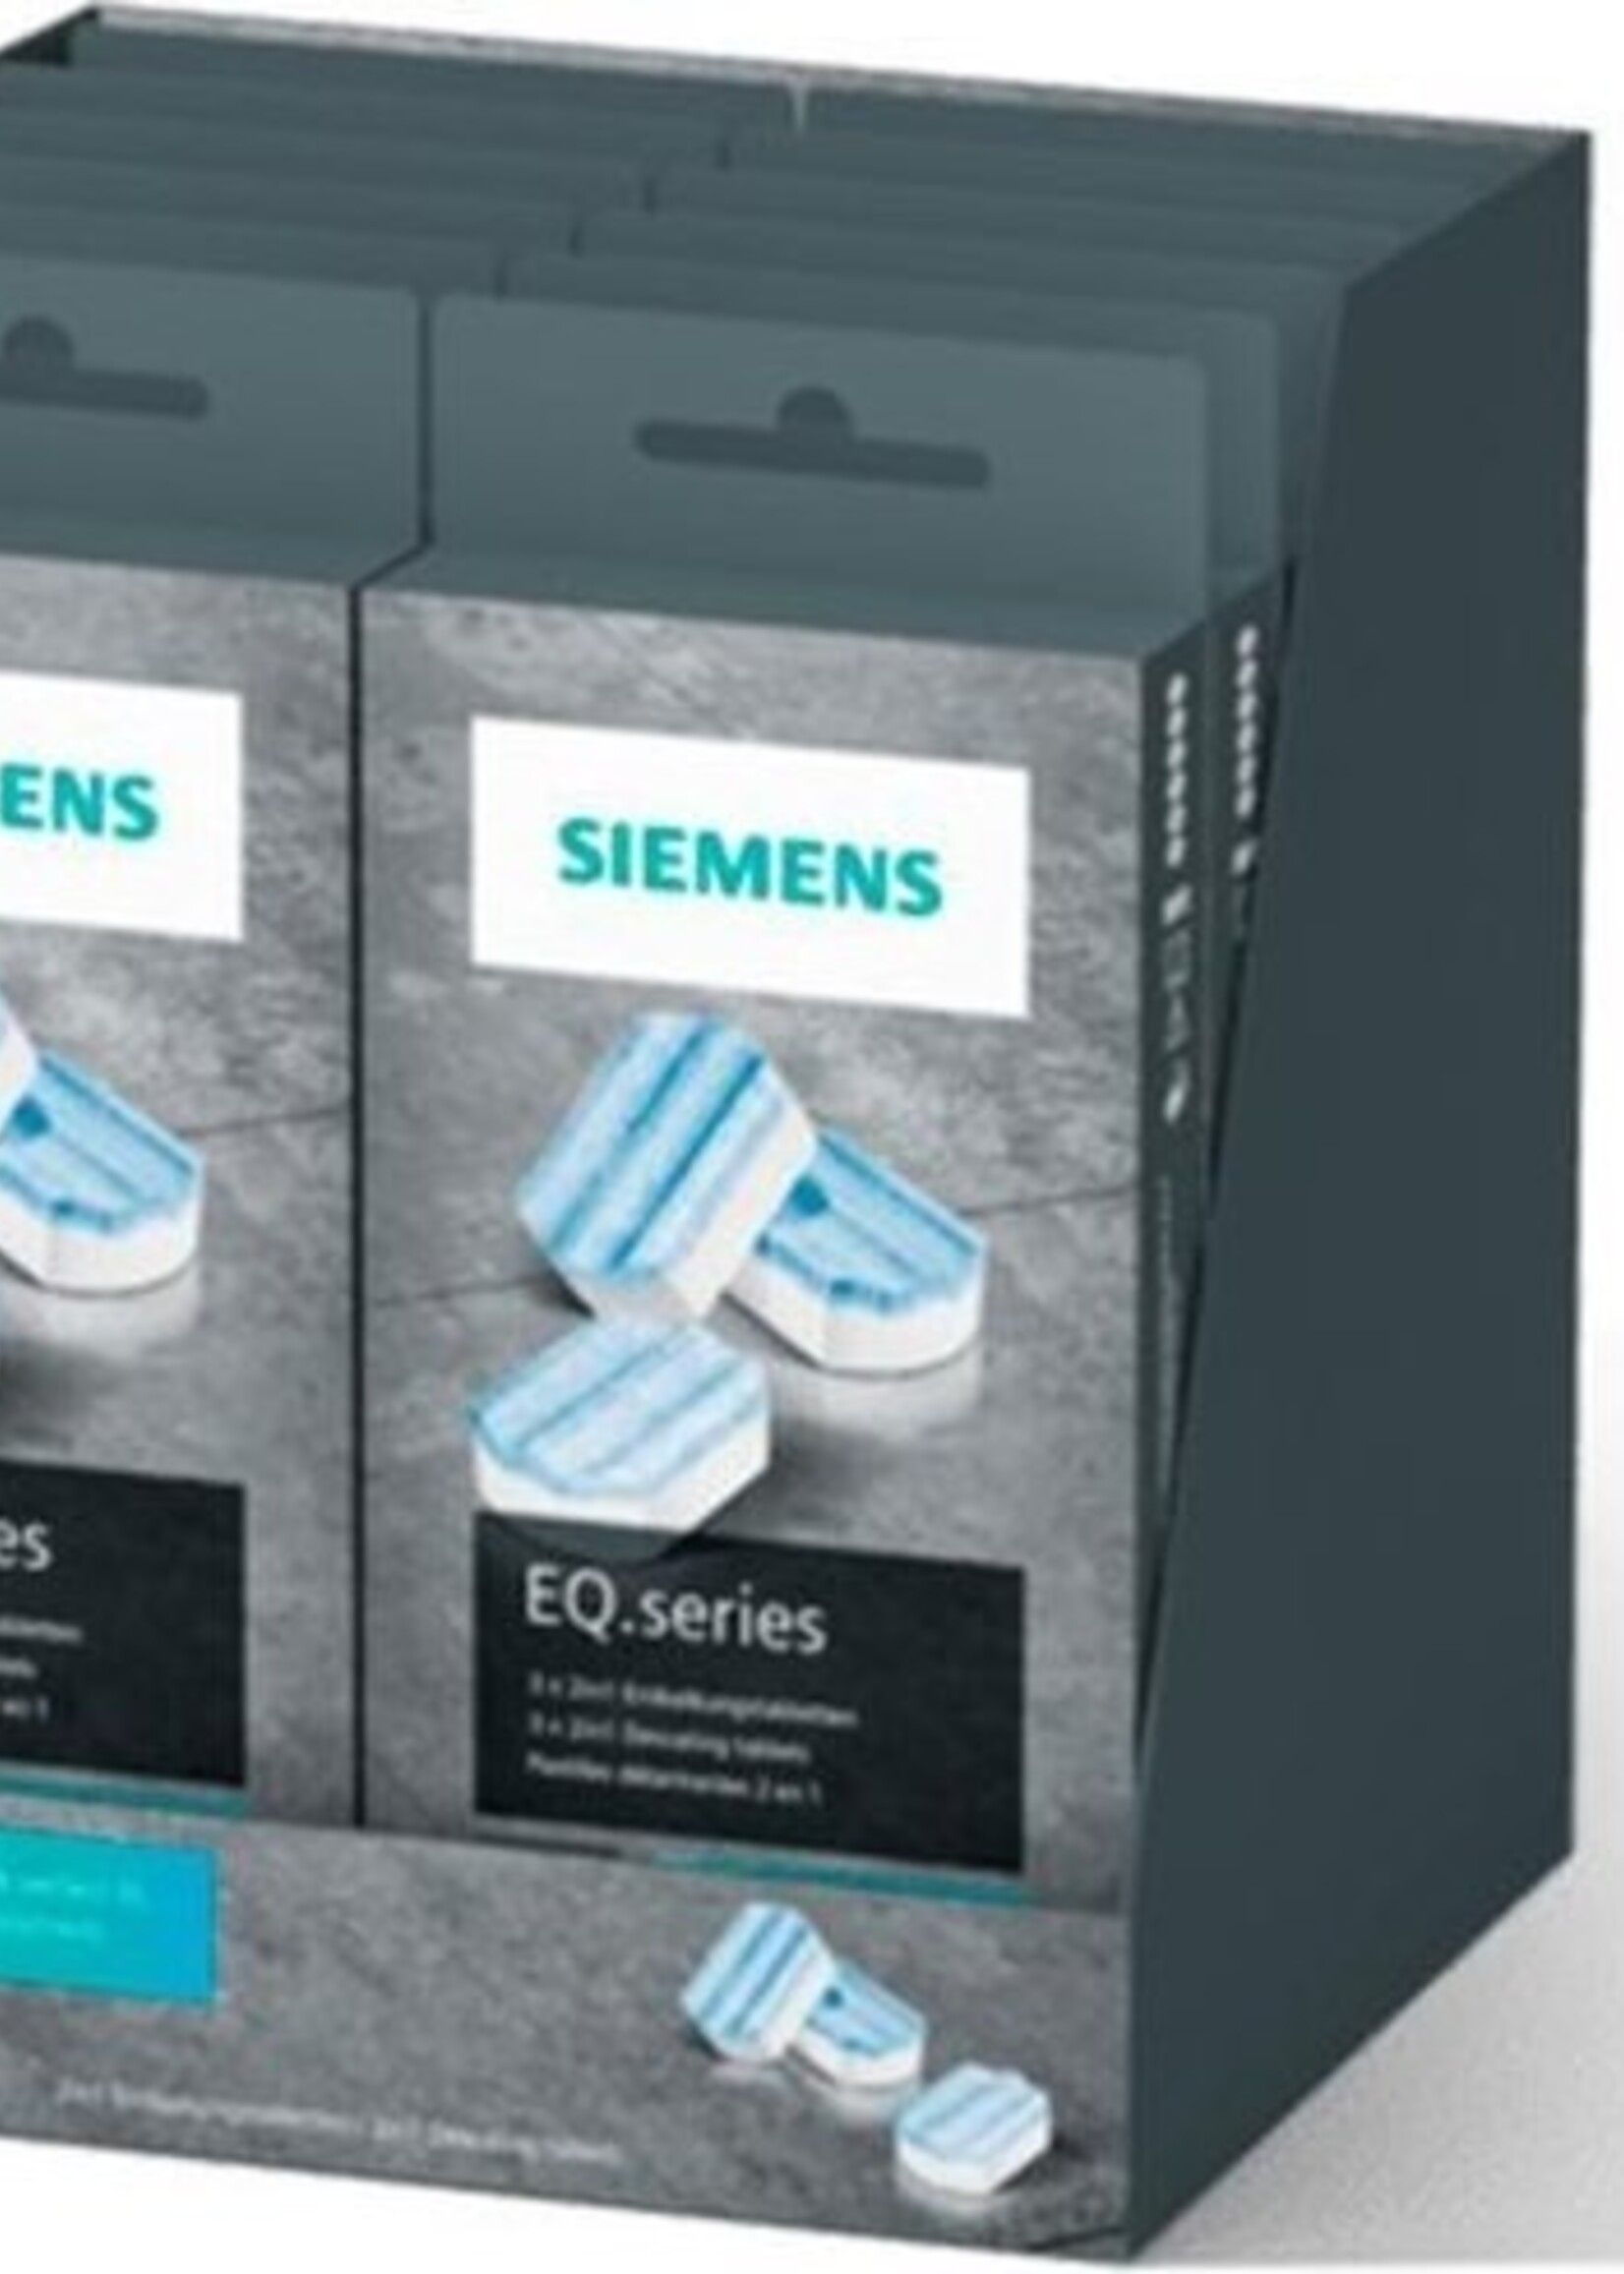 Siemens TZ80002A EQ Ontkalkingstabletten (3 stuks)